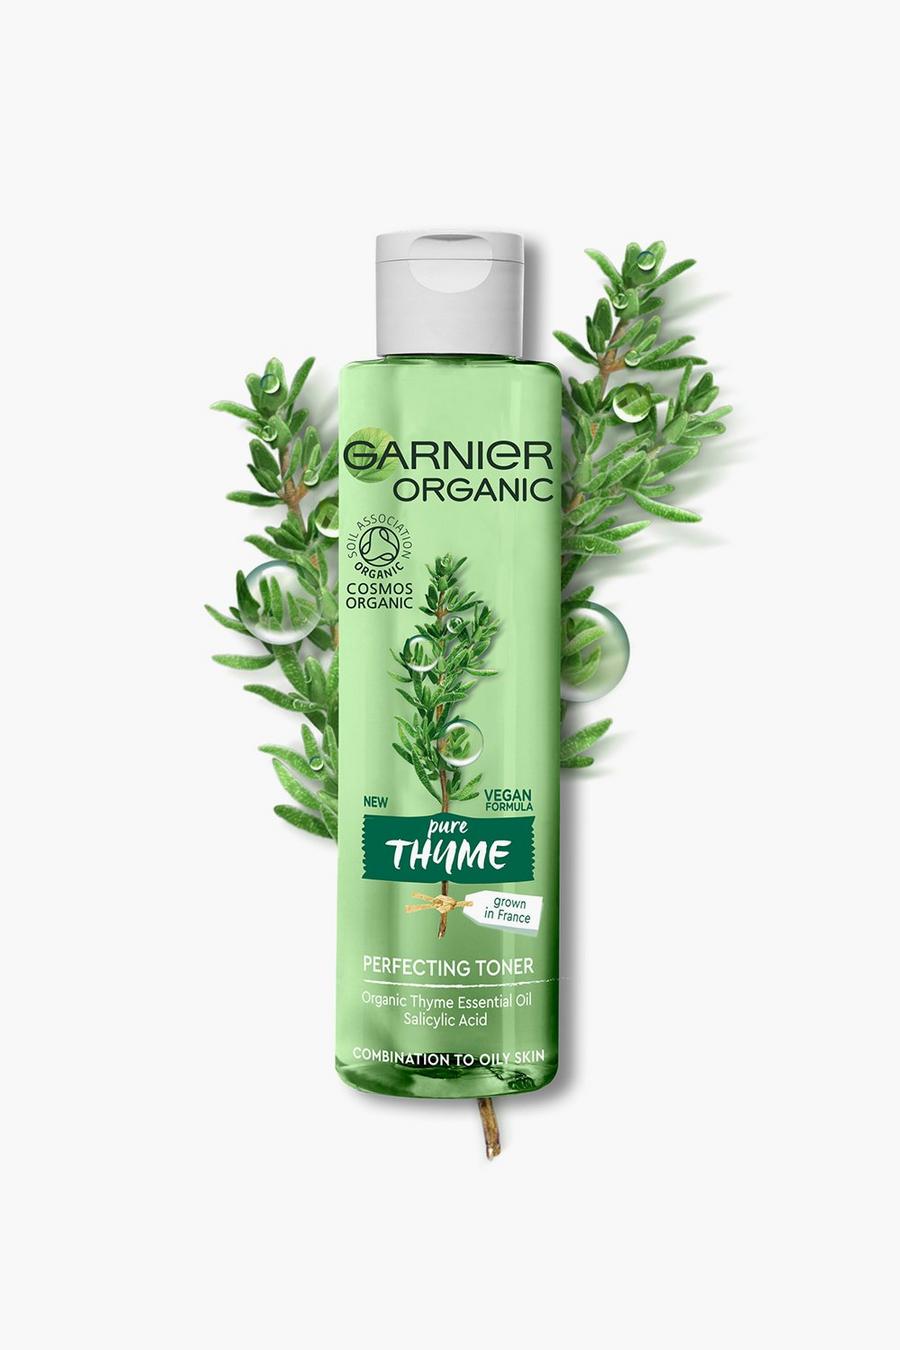 Green gerde Garnier Organic Thyme Perfecting Toner 150ml